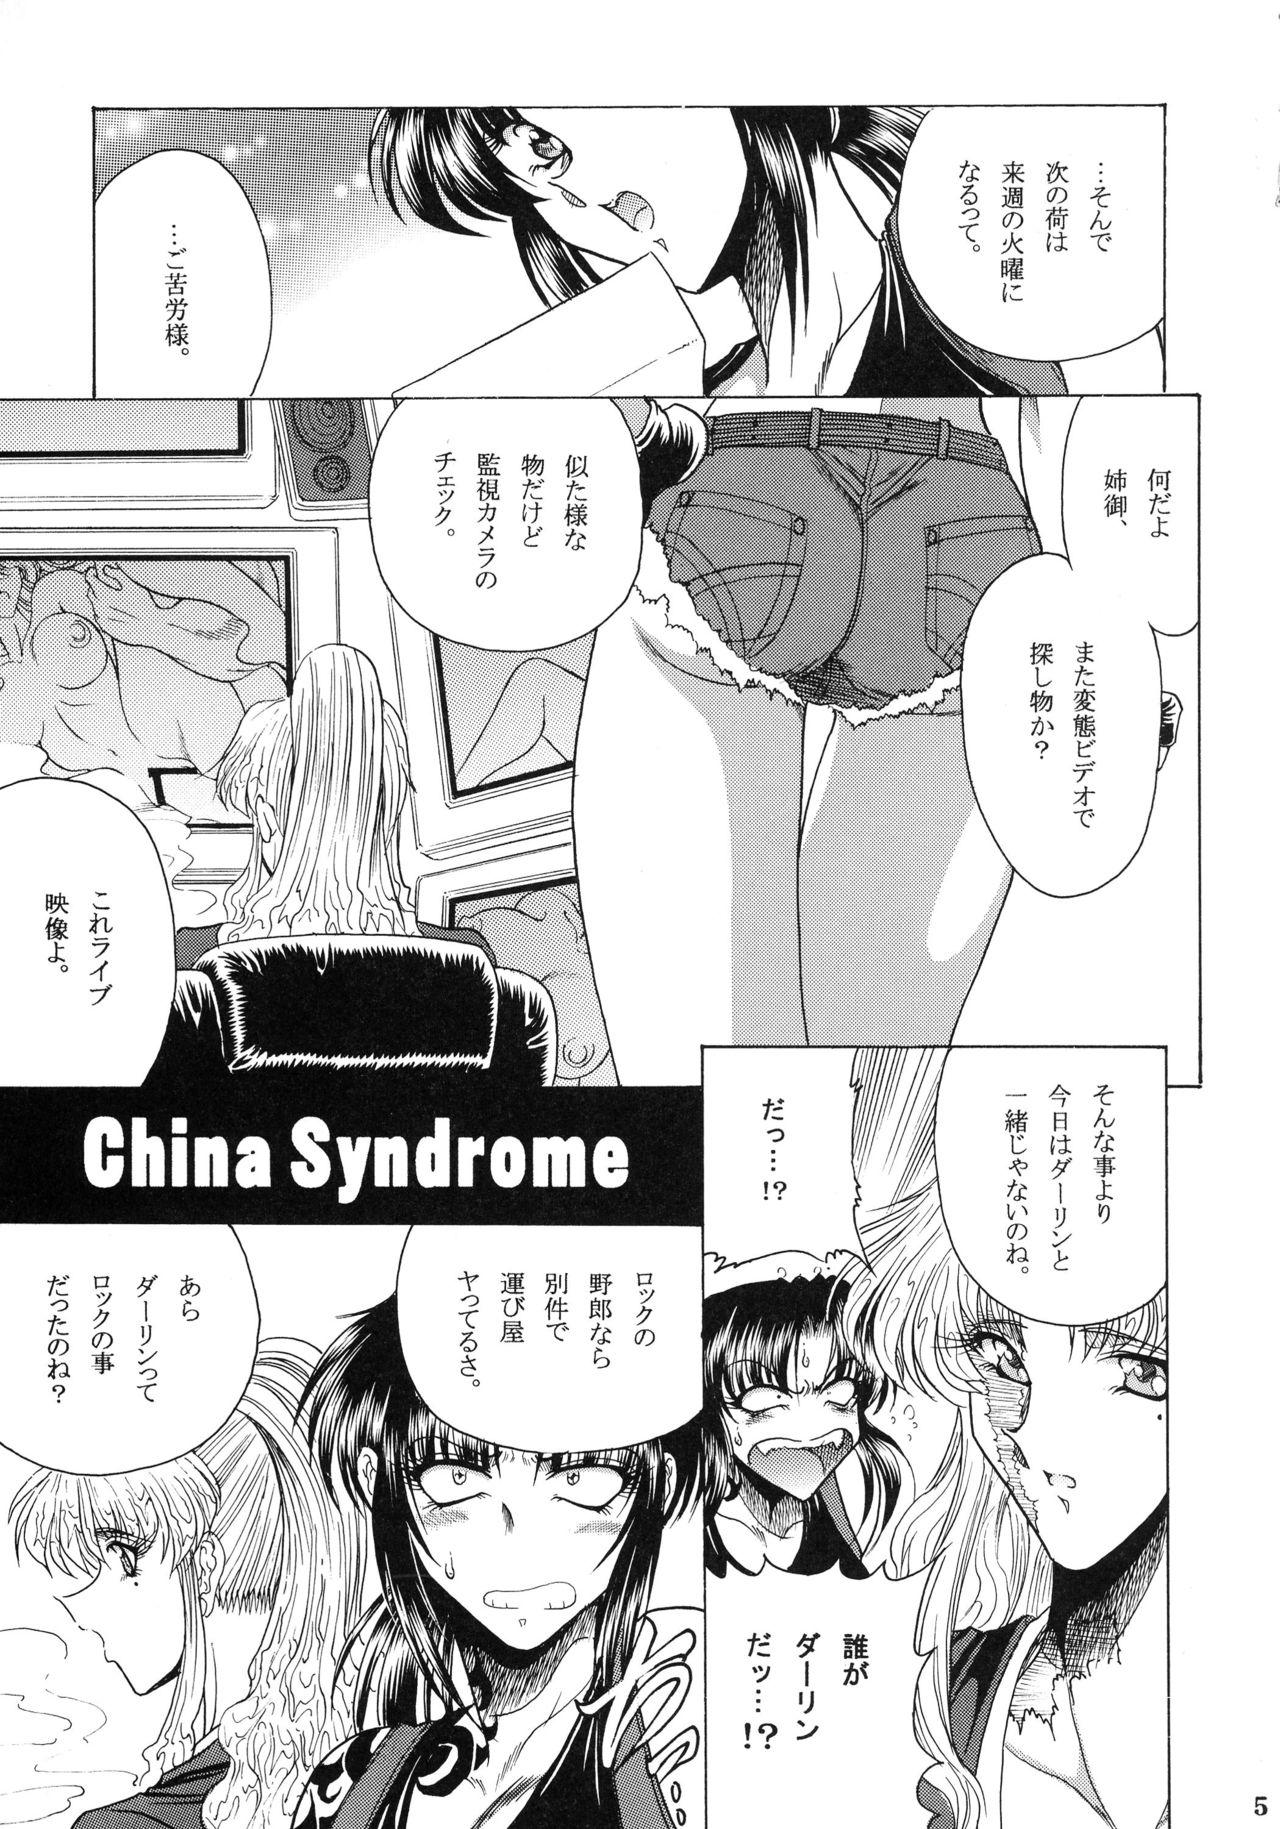 Pija ZONE 38 China Syndrome - Black lagoon Best Blowjob - Page 4